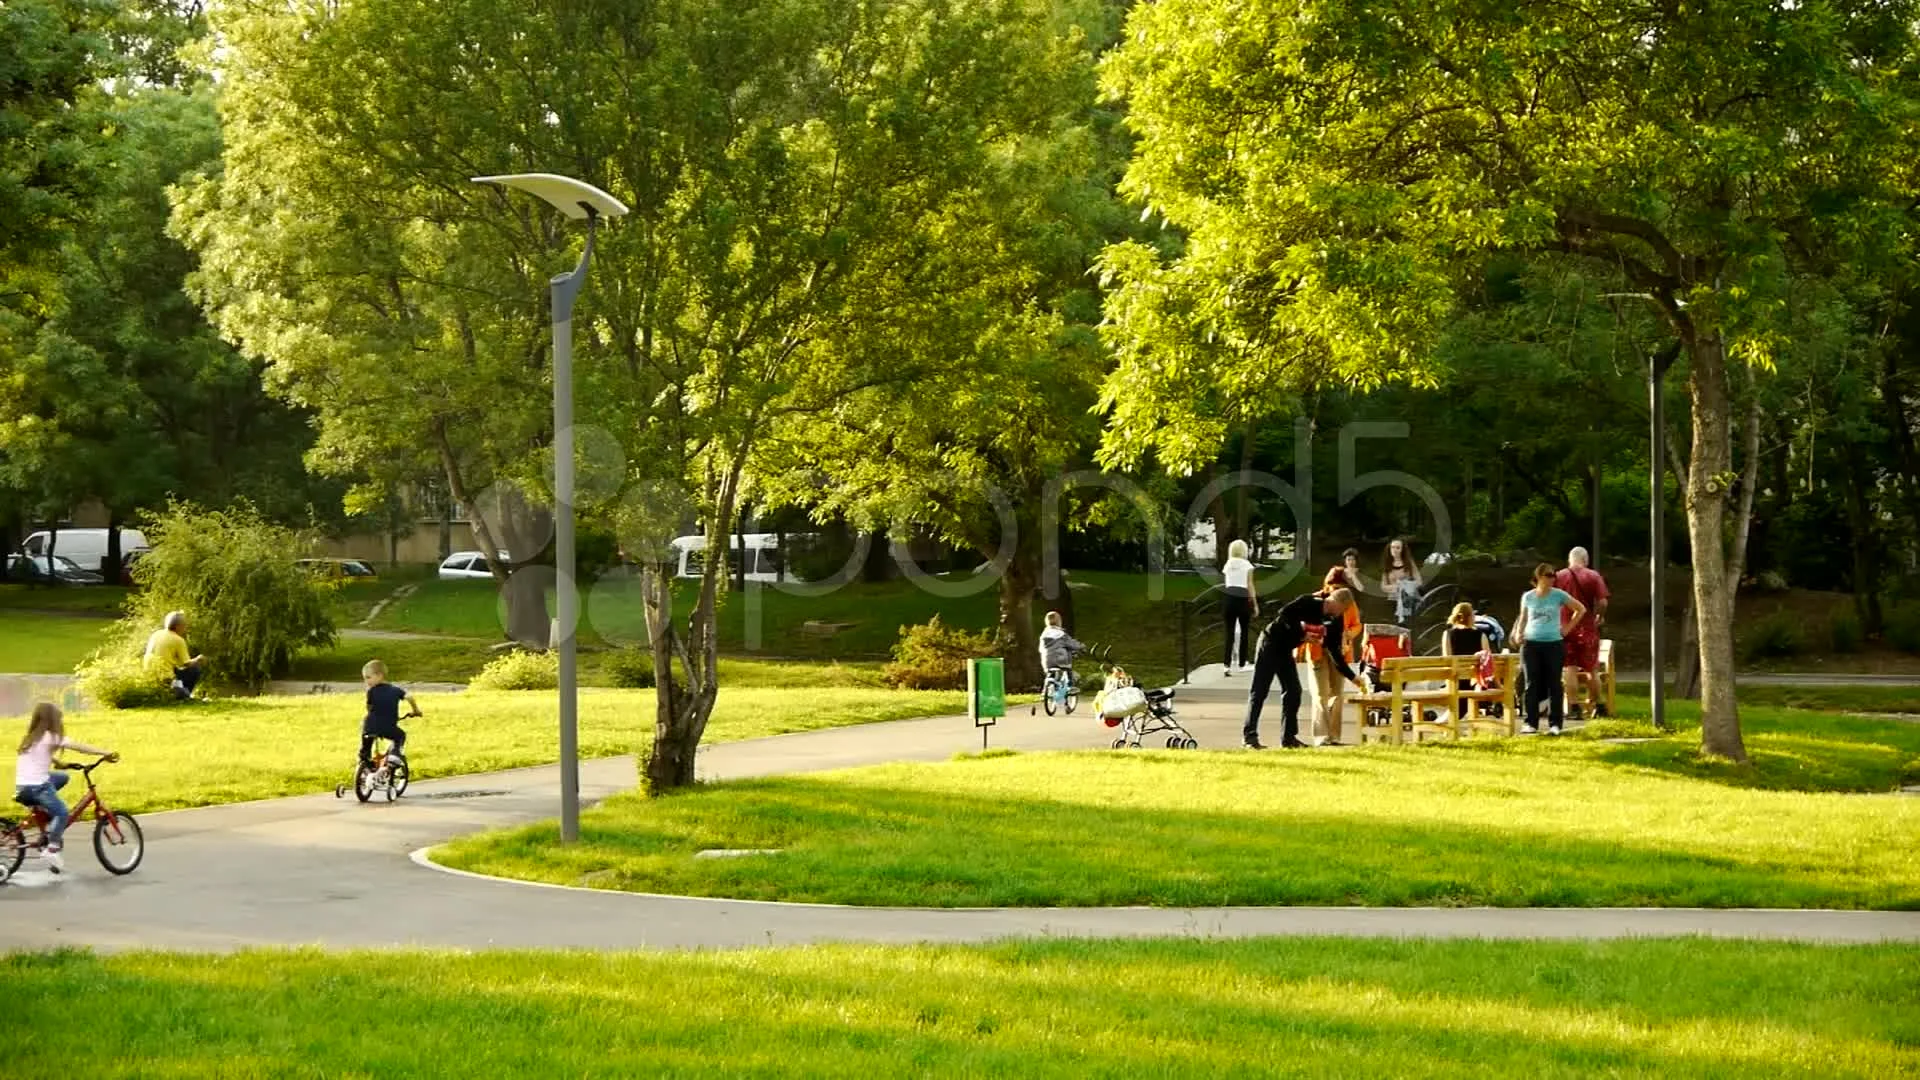 City Park Background